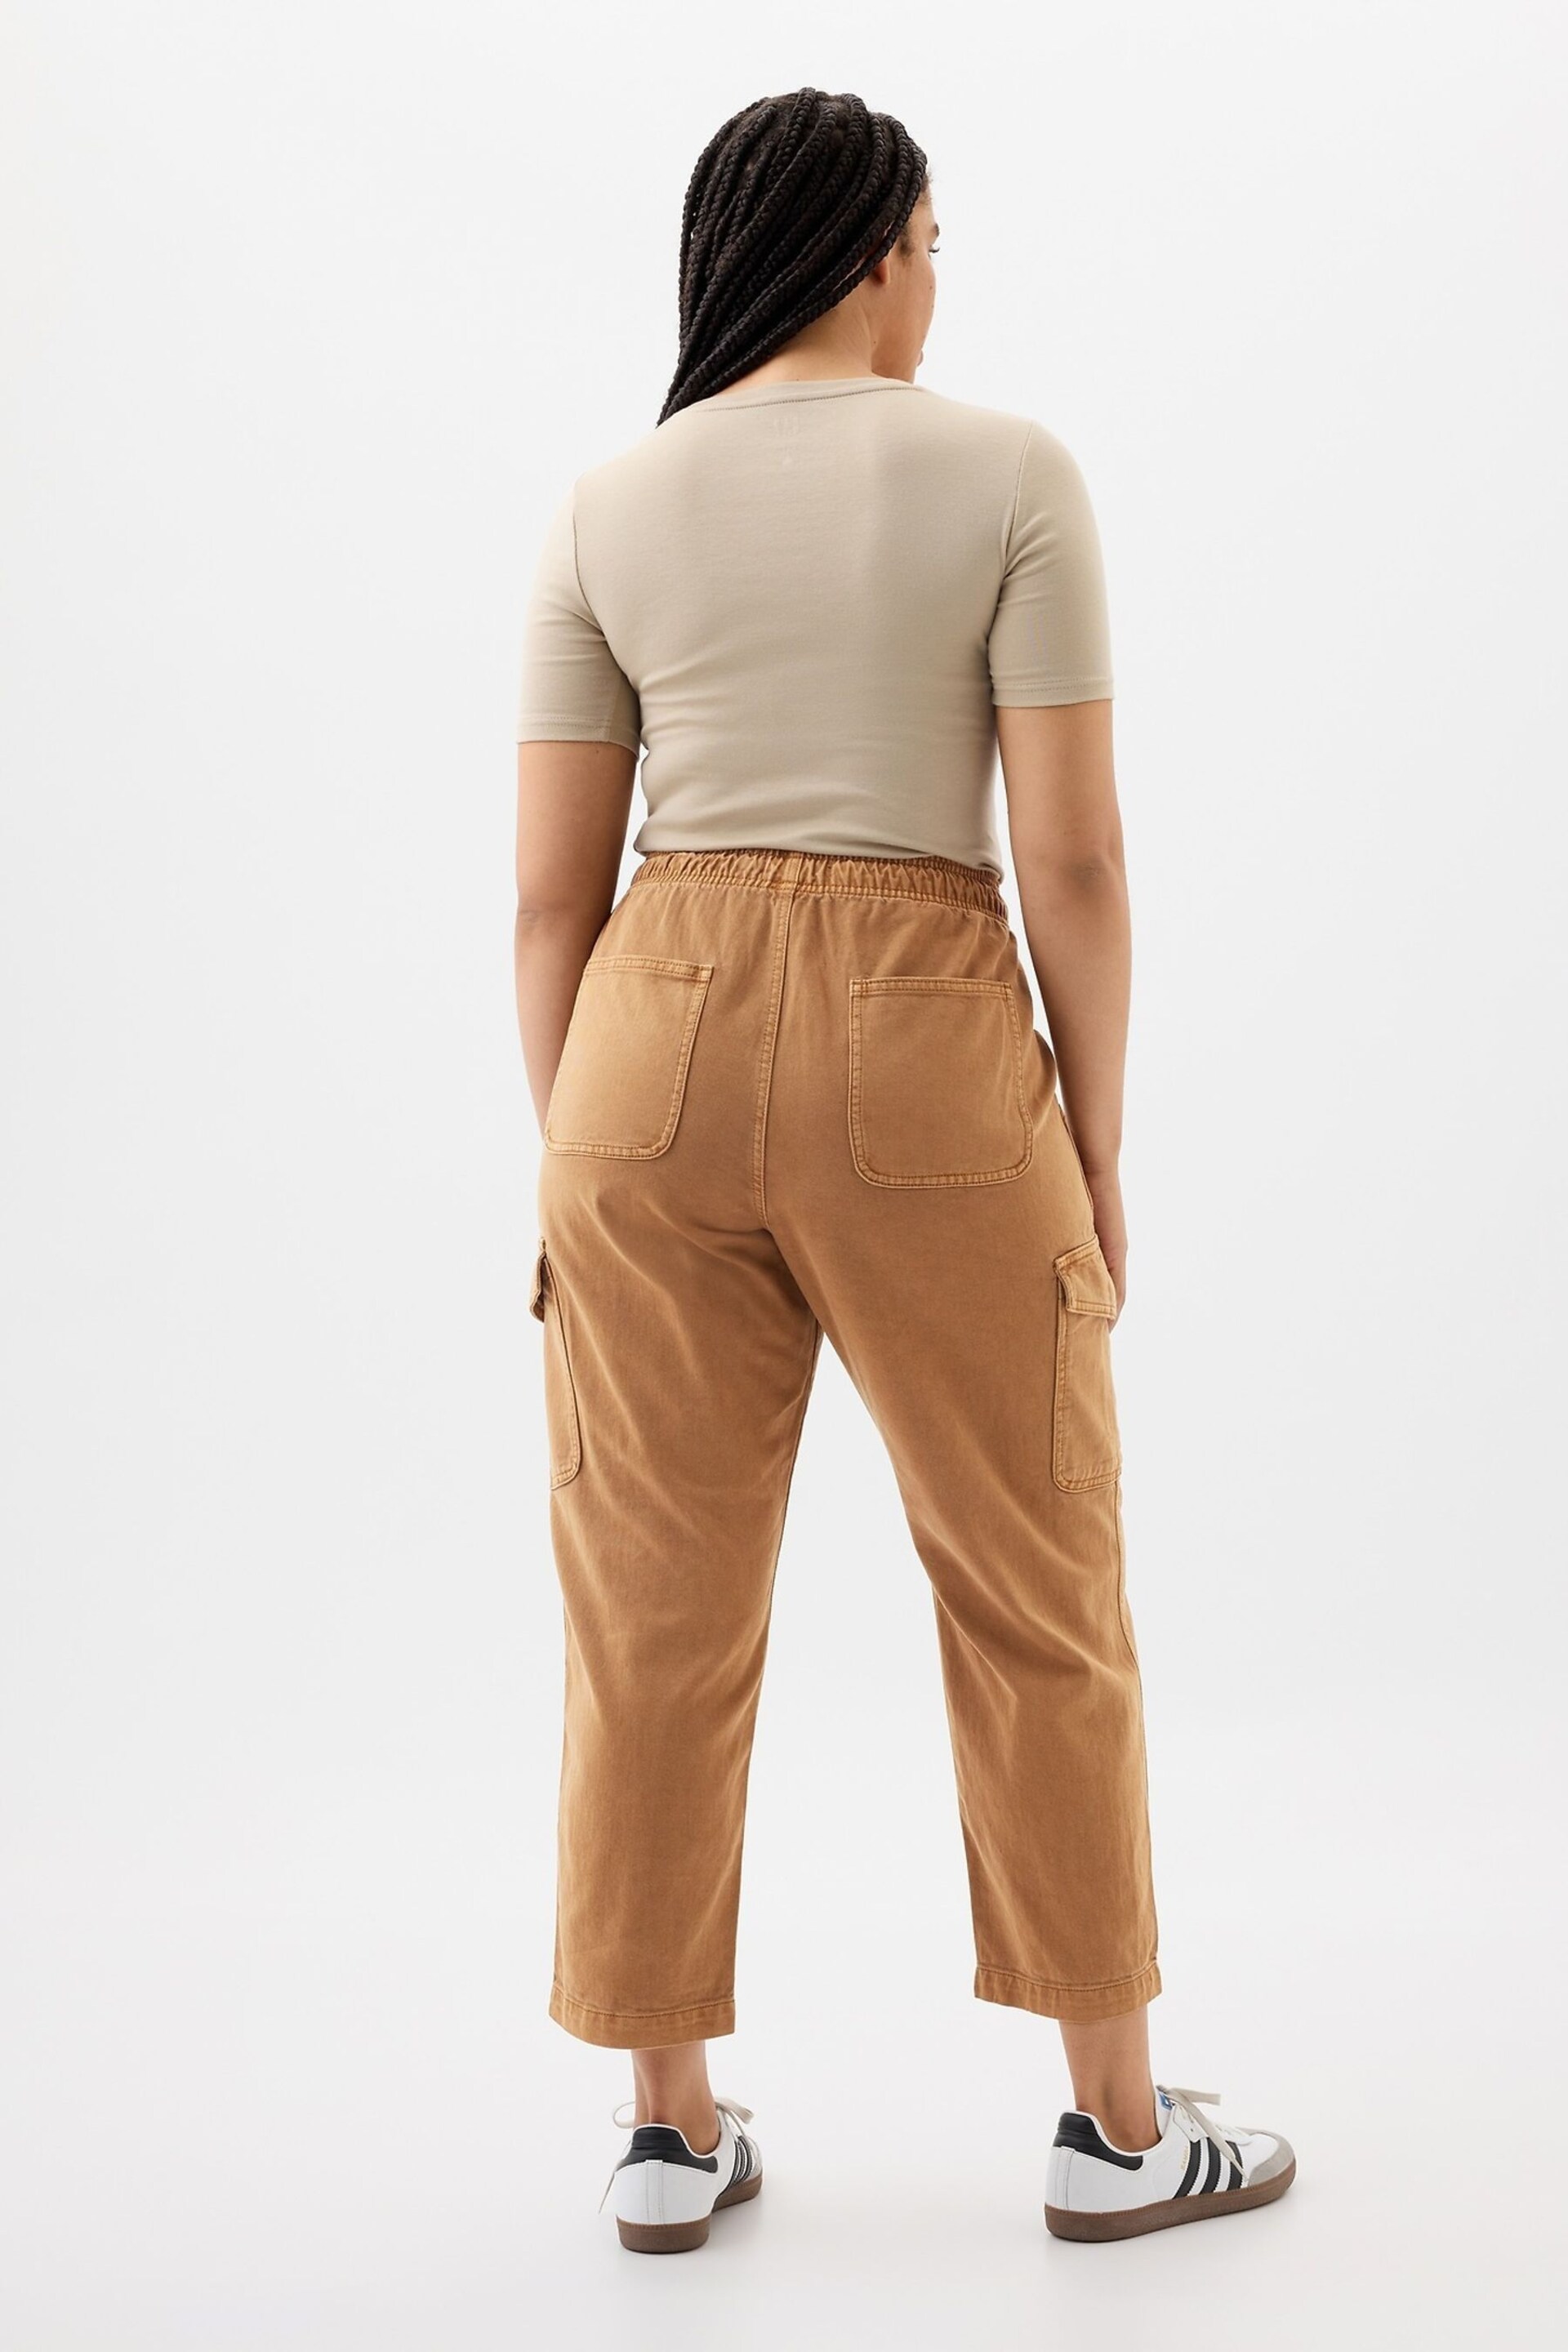 Gap Brown Denim Cargo Jeans - Image 2 of 5